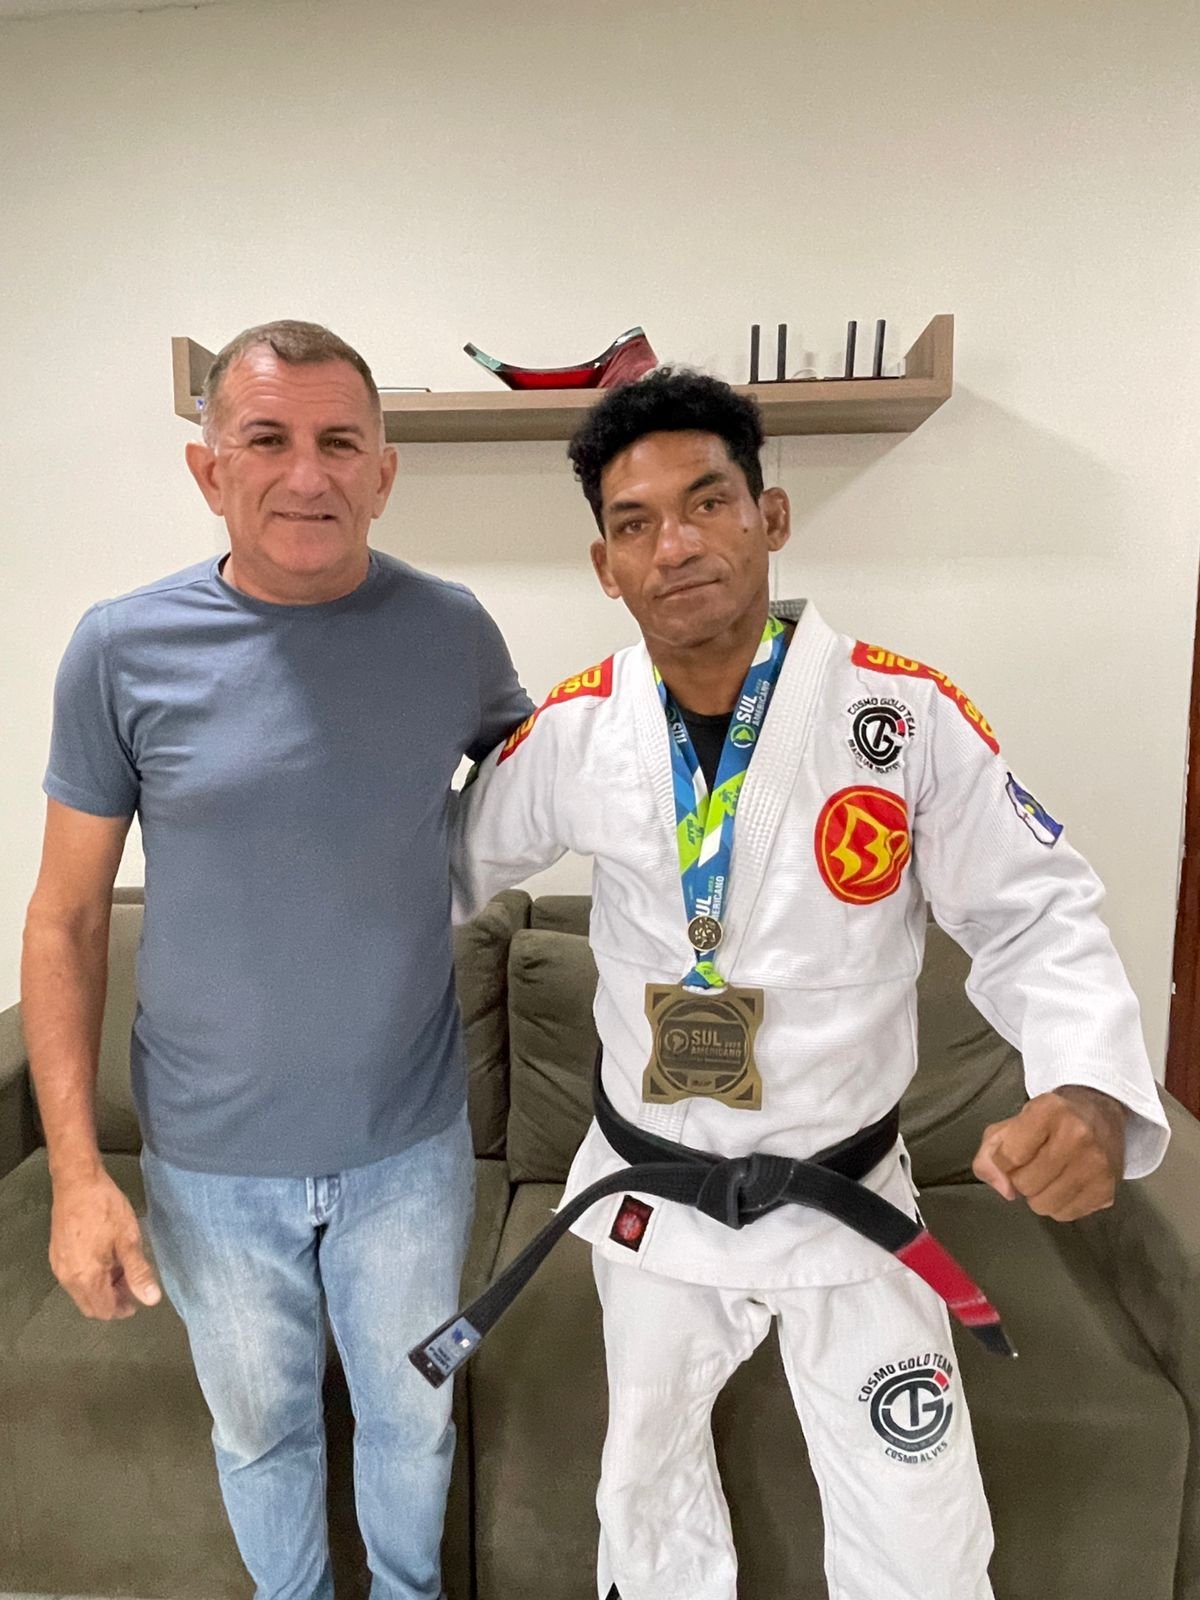 Atleta patoense recebe apoio para disputar Campeonato Brasileiro de Jiu-Jitsu em São Paulo